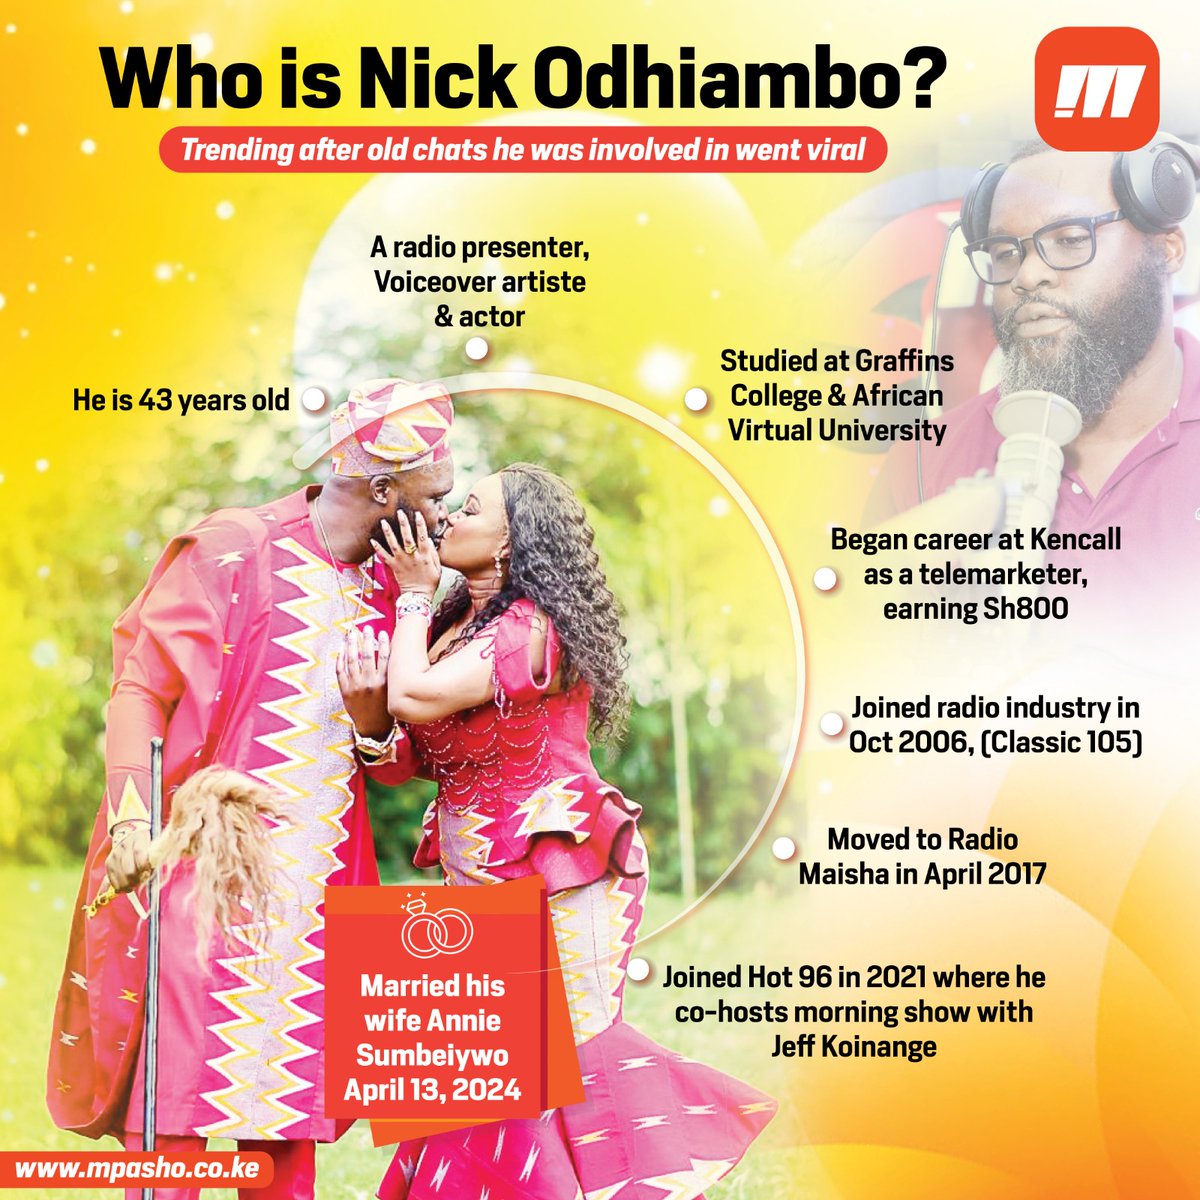 What you need to know about Nick Odhiambo. 

Mpasho.co.ke 
#mpashoinfographics